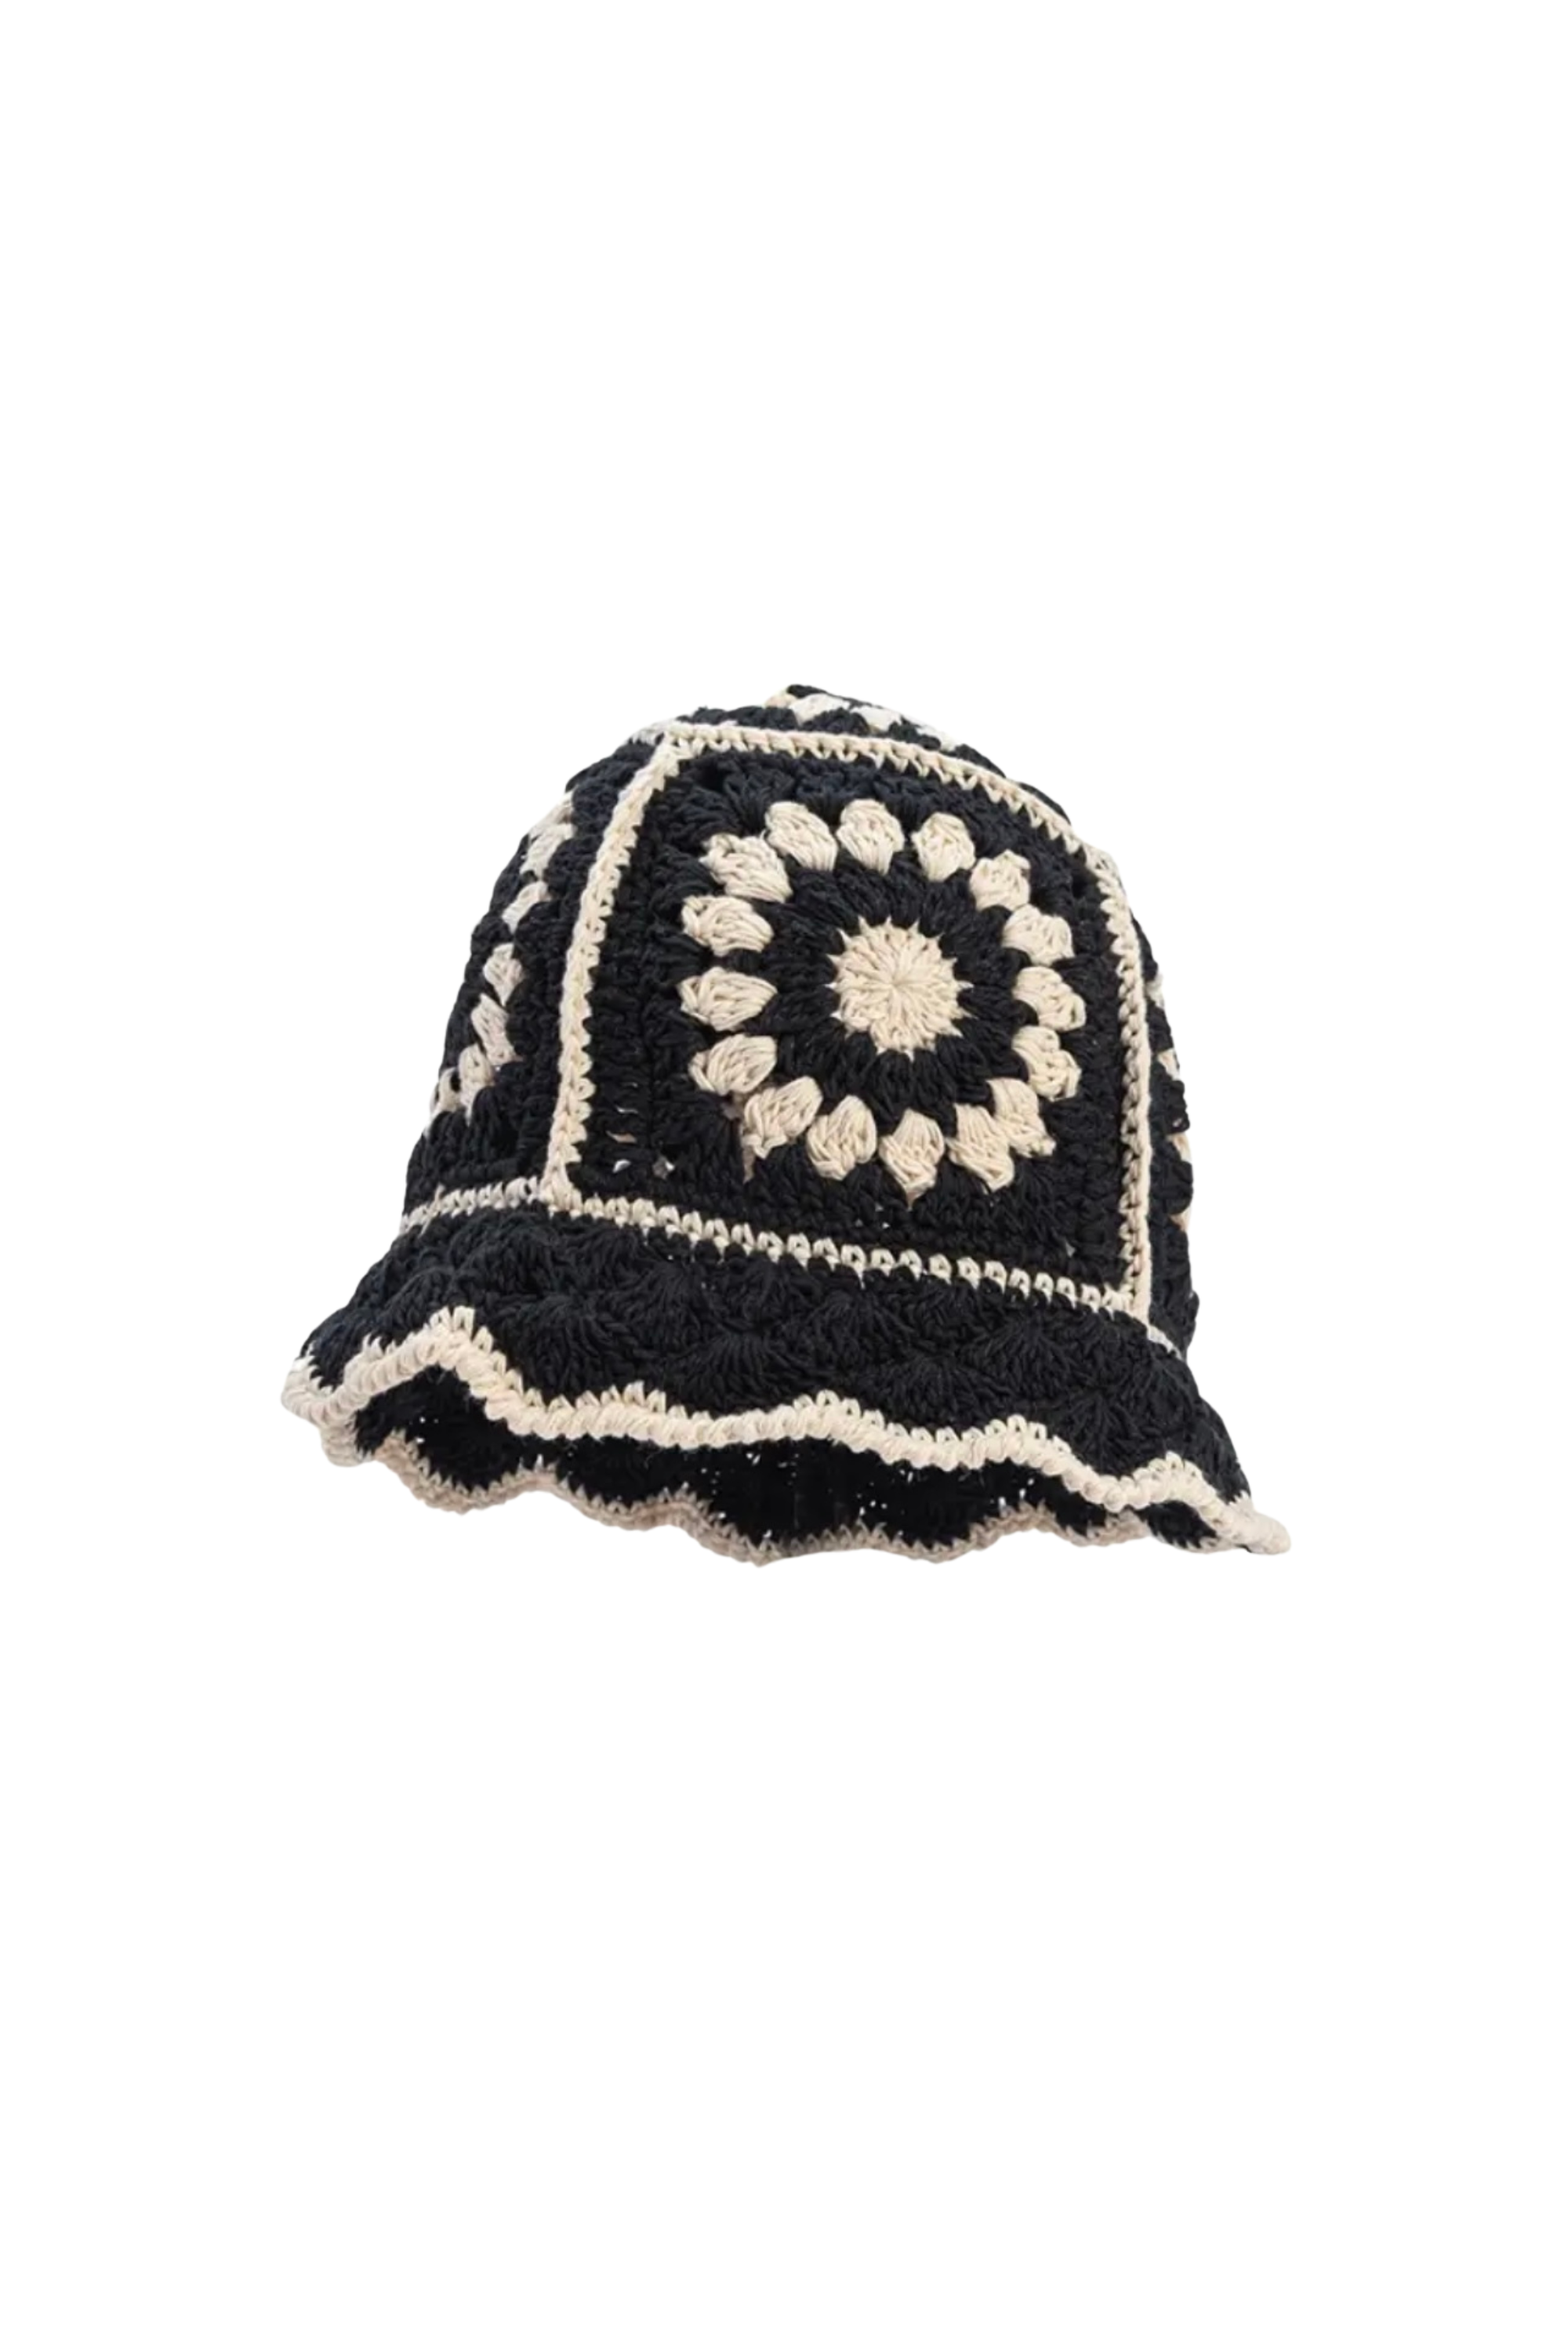 GOLDxTEAL designer crochet bucket hat.